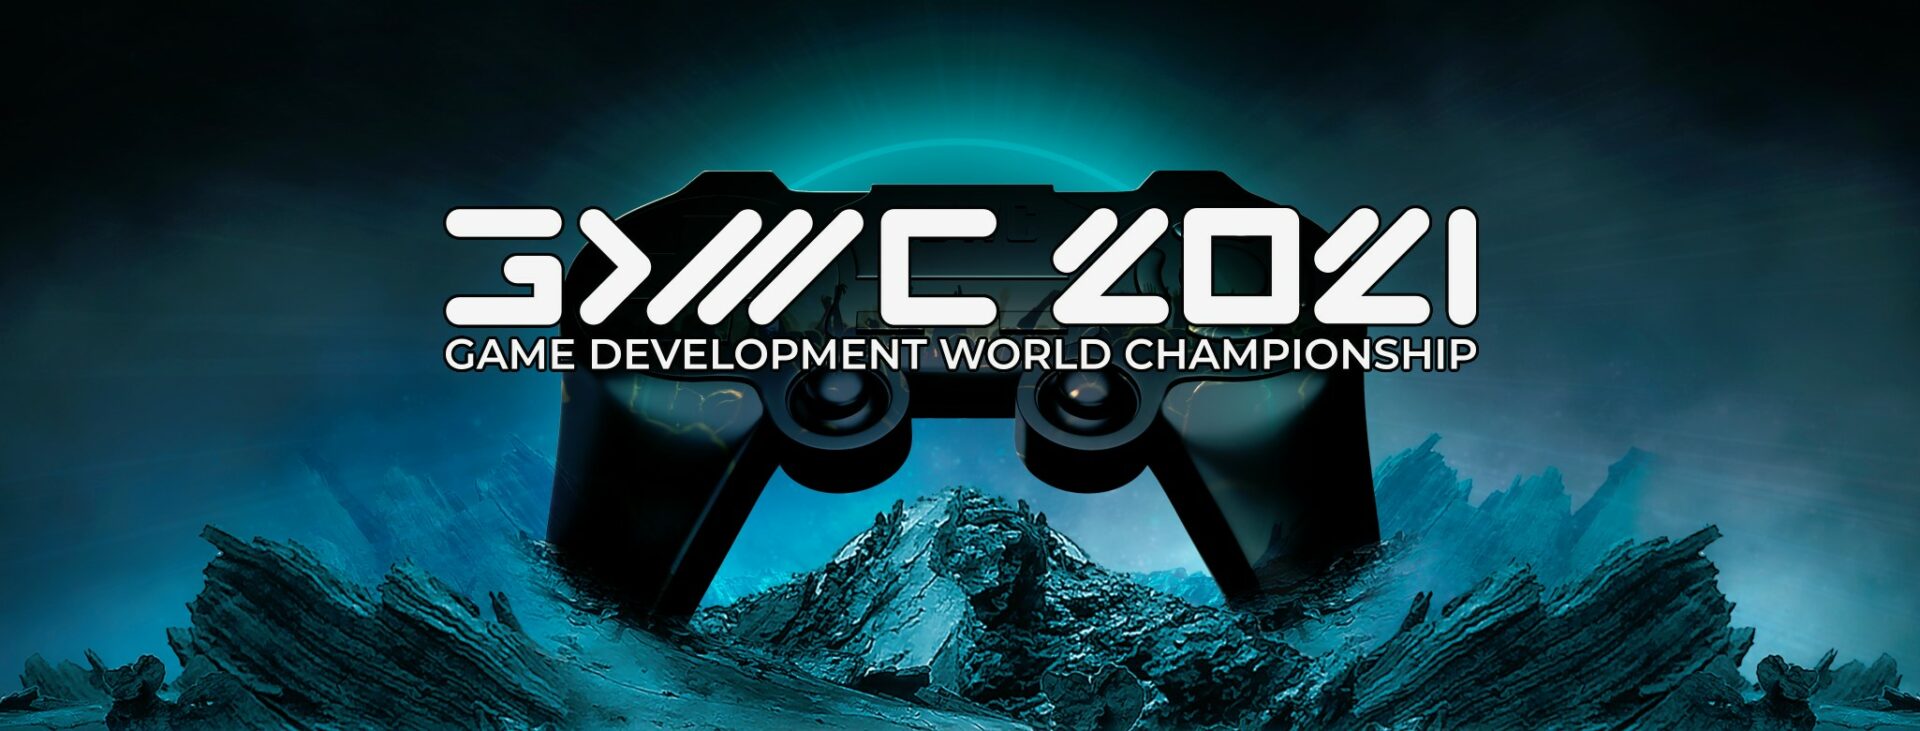 Game Development World Championship 2022 Game News Indie Game Fans News